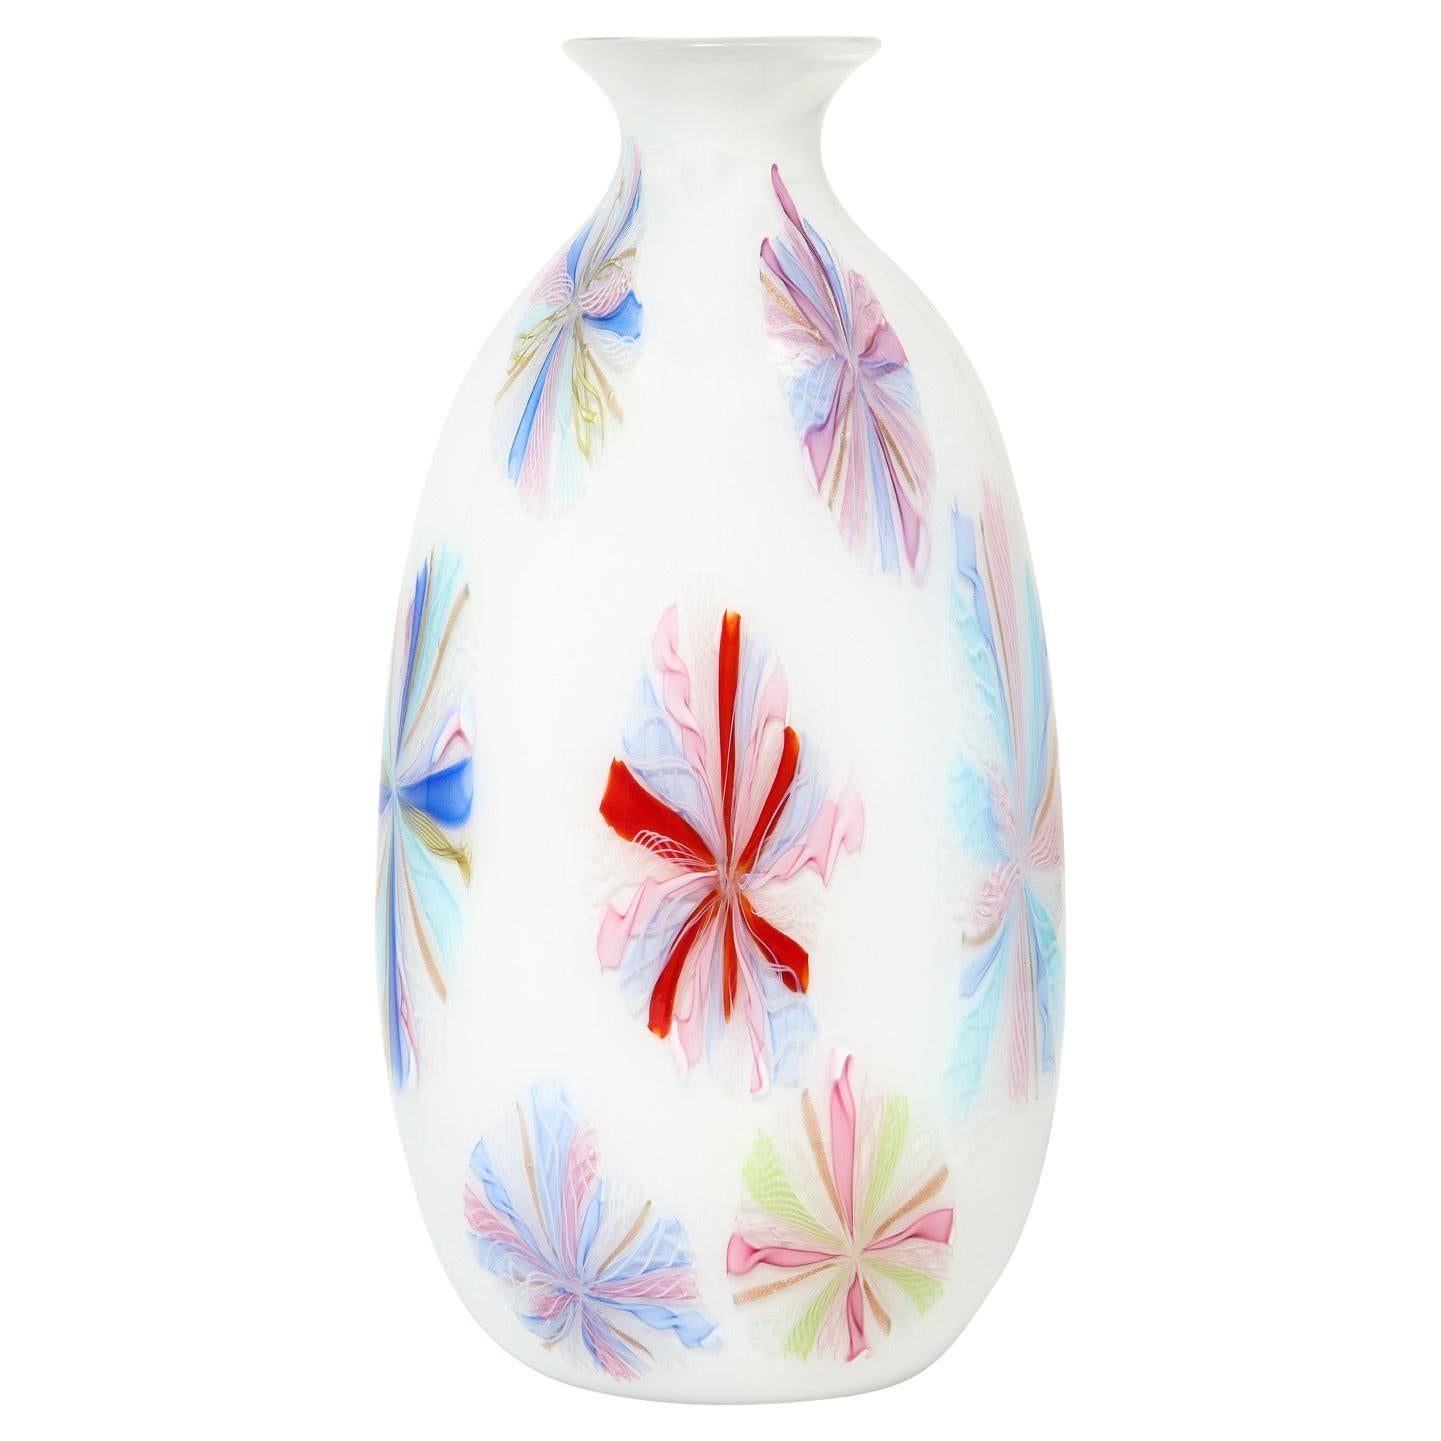 A.V.E.M. Vase aus mundgeblasenem Glas mit farbenfrohen Starburst-Wandmalereien, 1950er Jahre